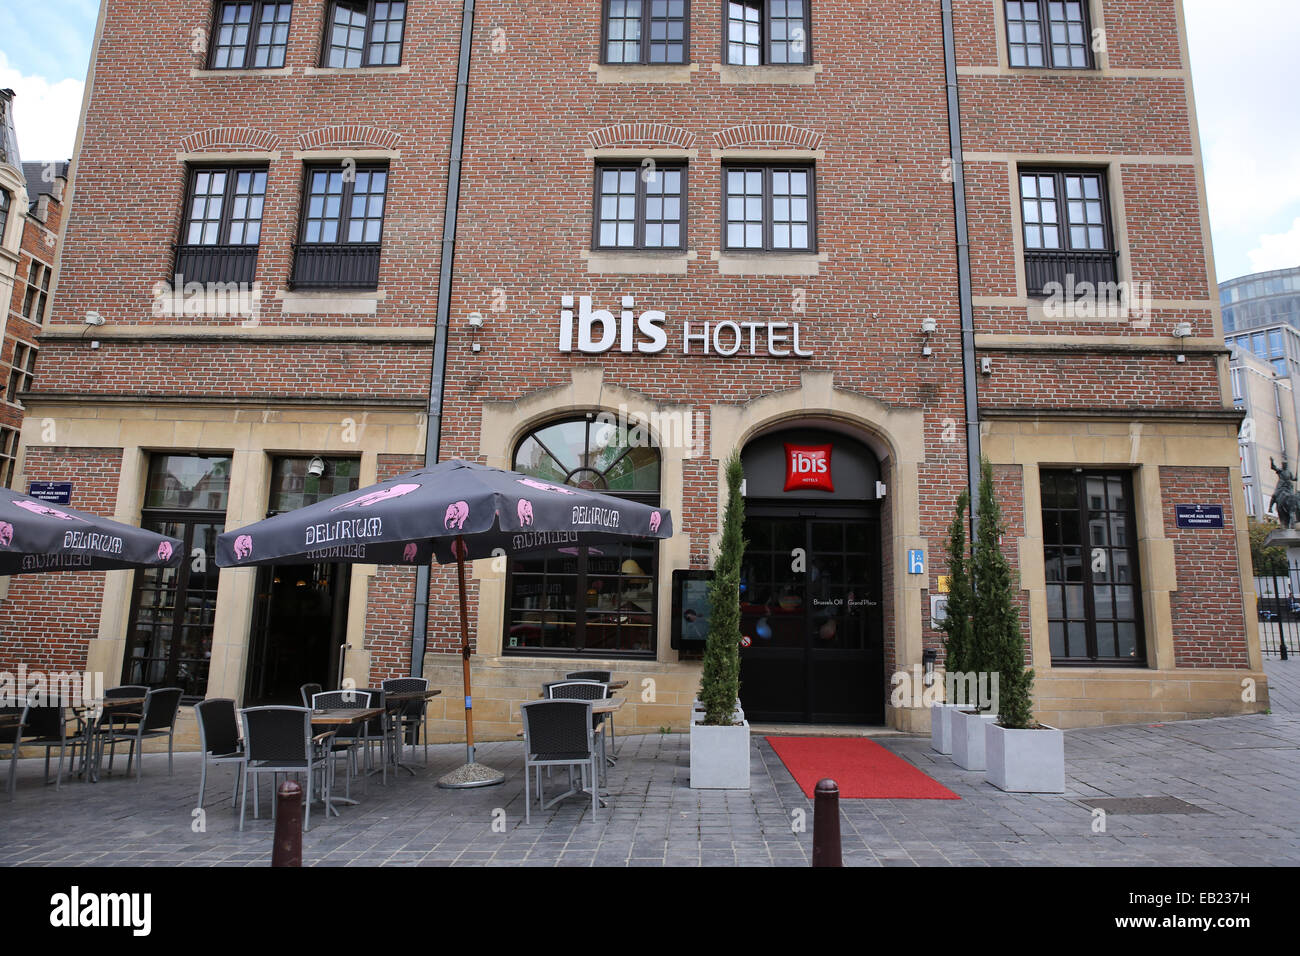 ibis hotel europe belgium brussels Stock Photo